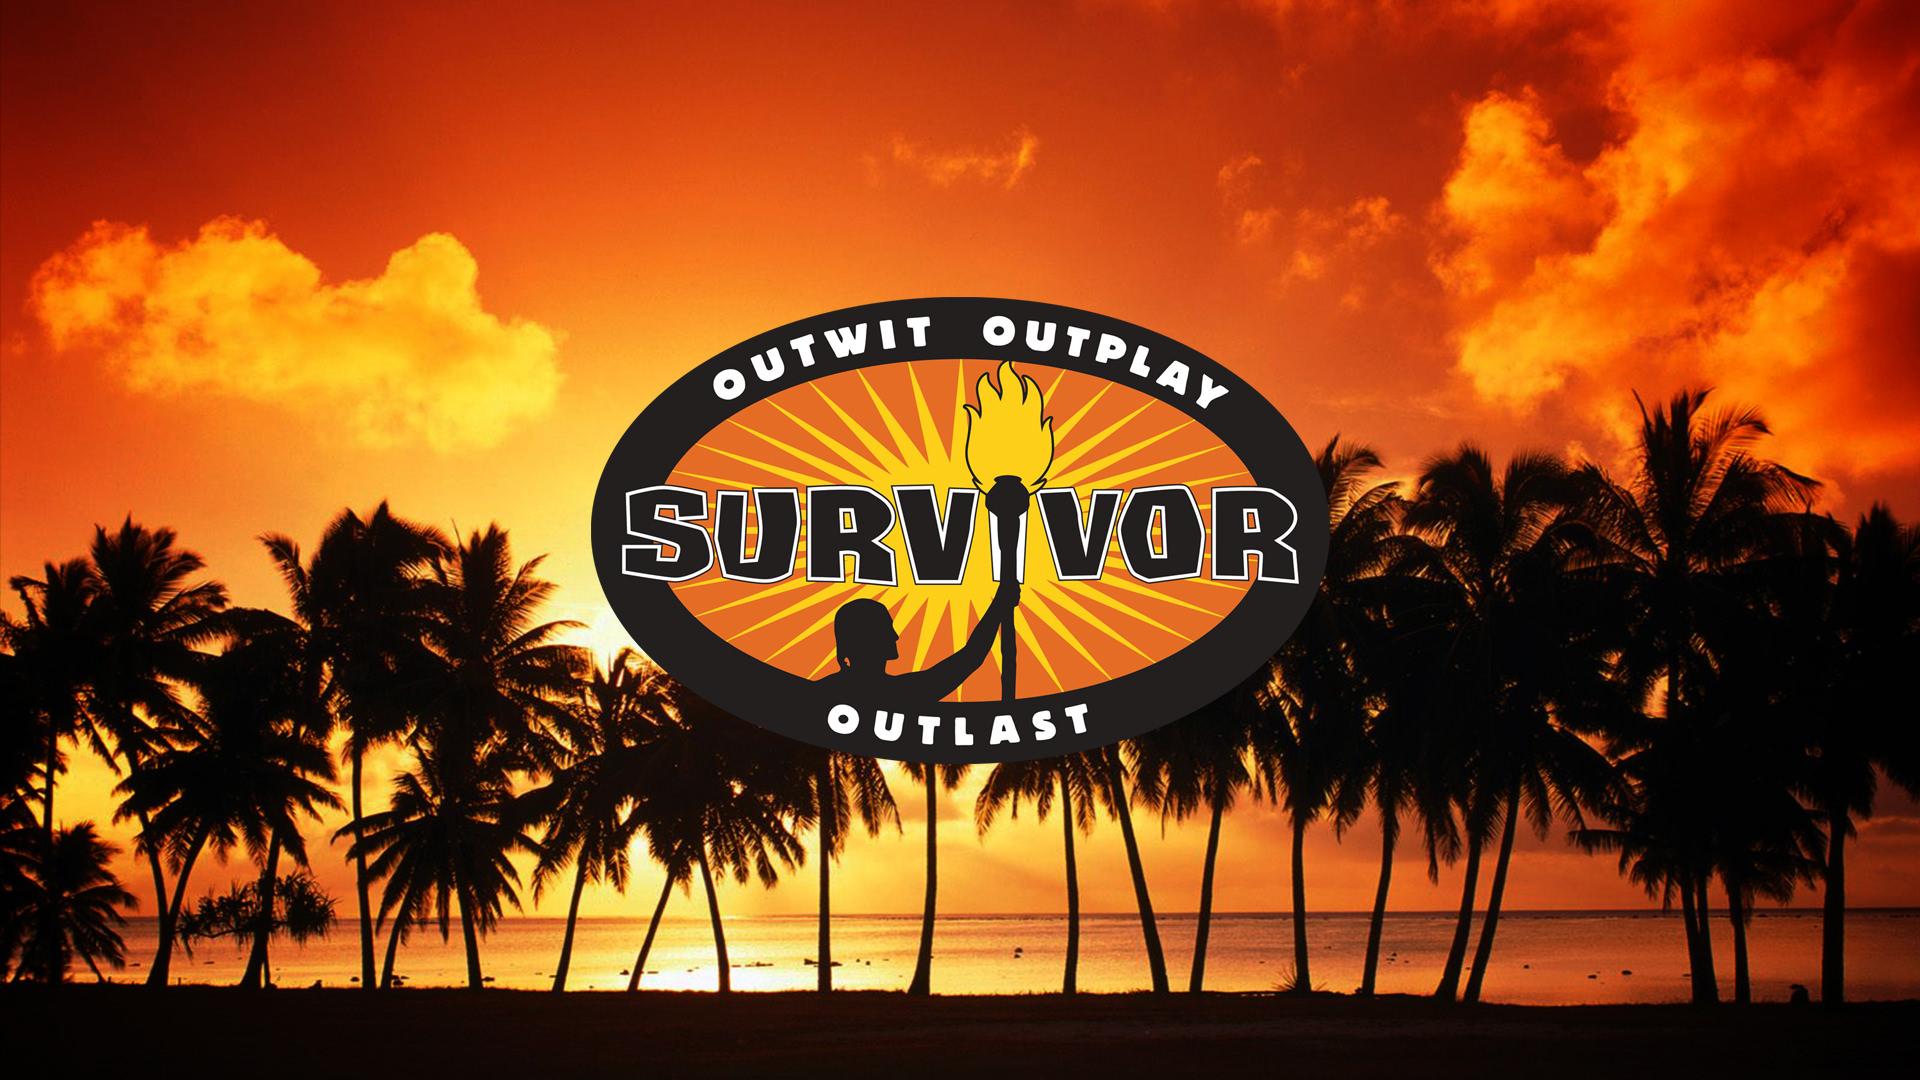 Best HD Walls of Survivor, High Quality Survivor Wallpaper